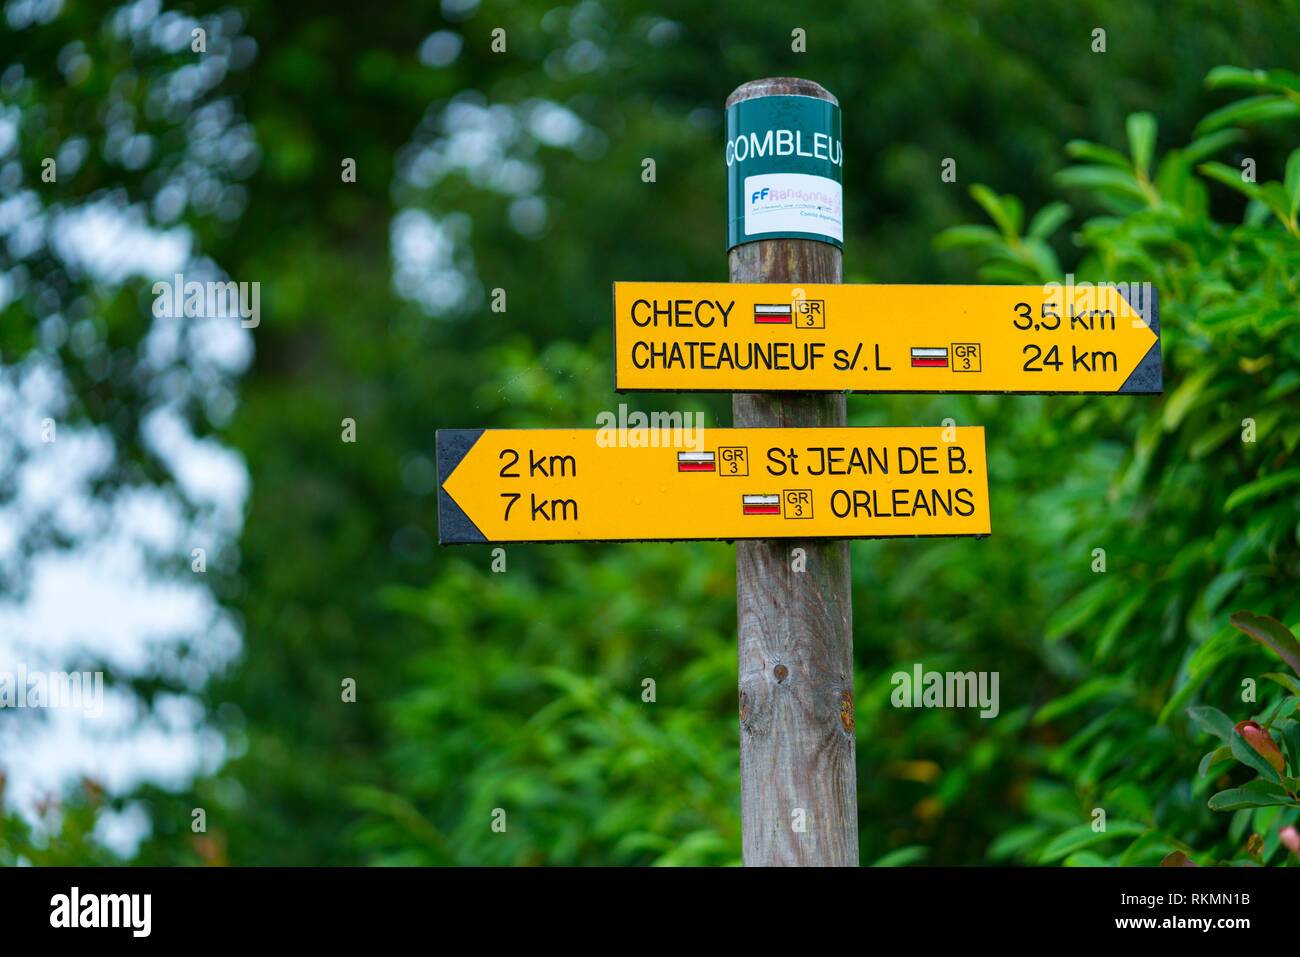 Trails signs, Loire River, Chécy Village, Loiret Department, The Loire Valley, France, Europe. Stock Photo